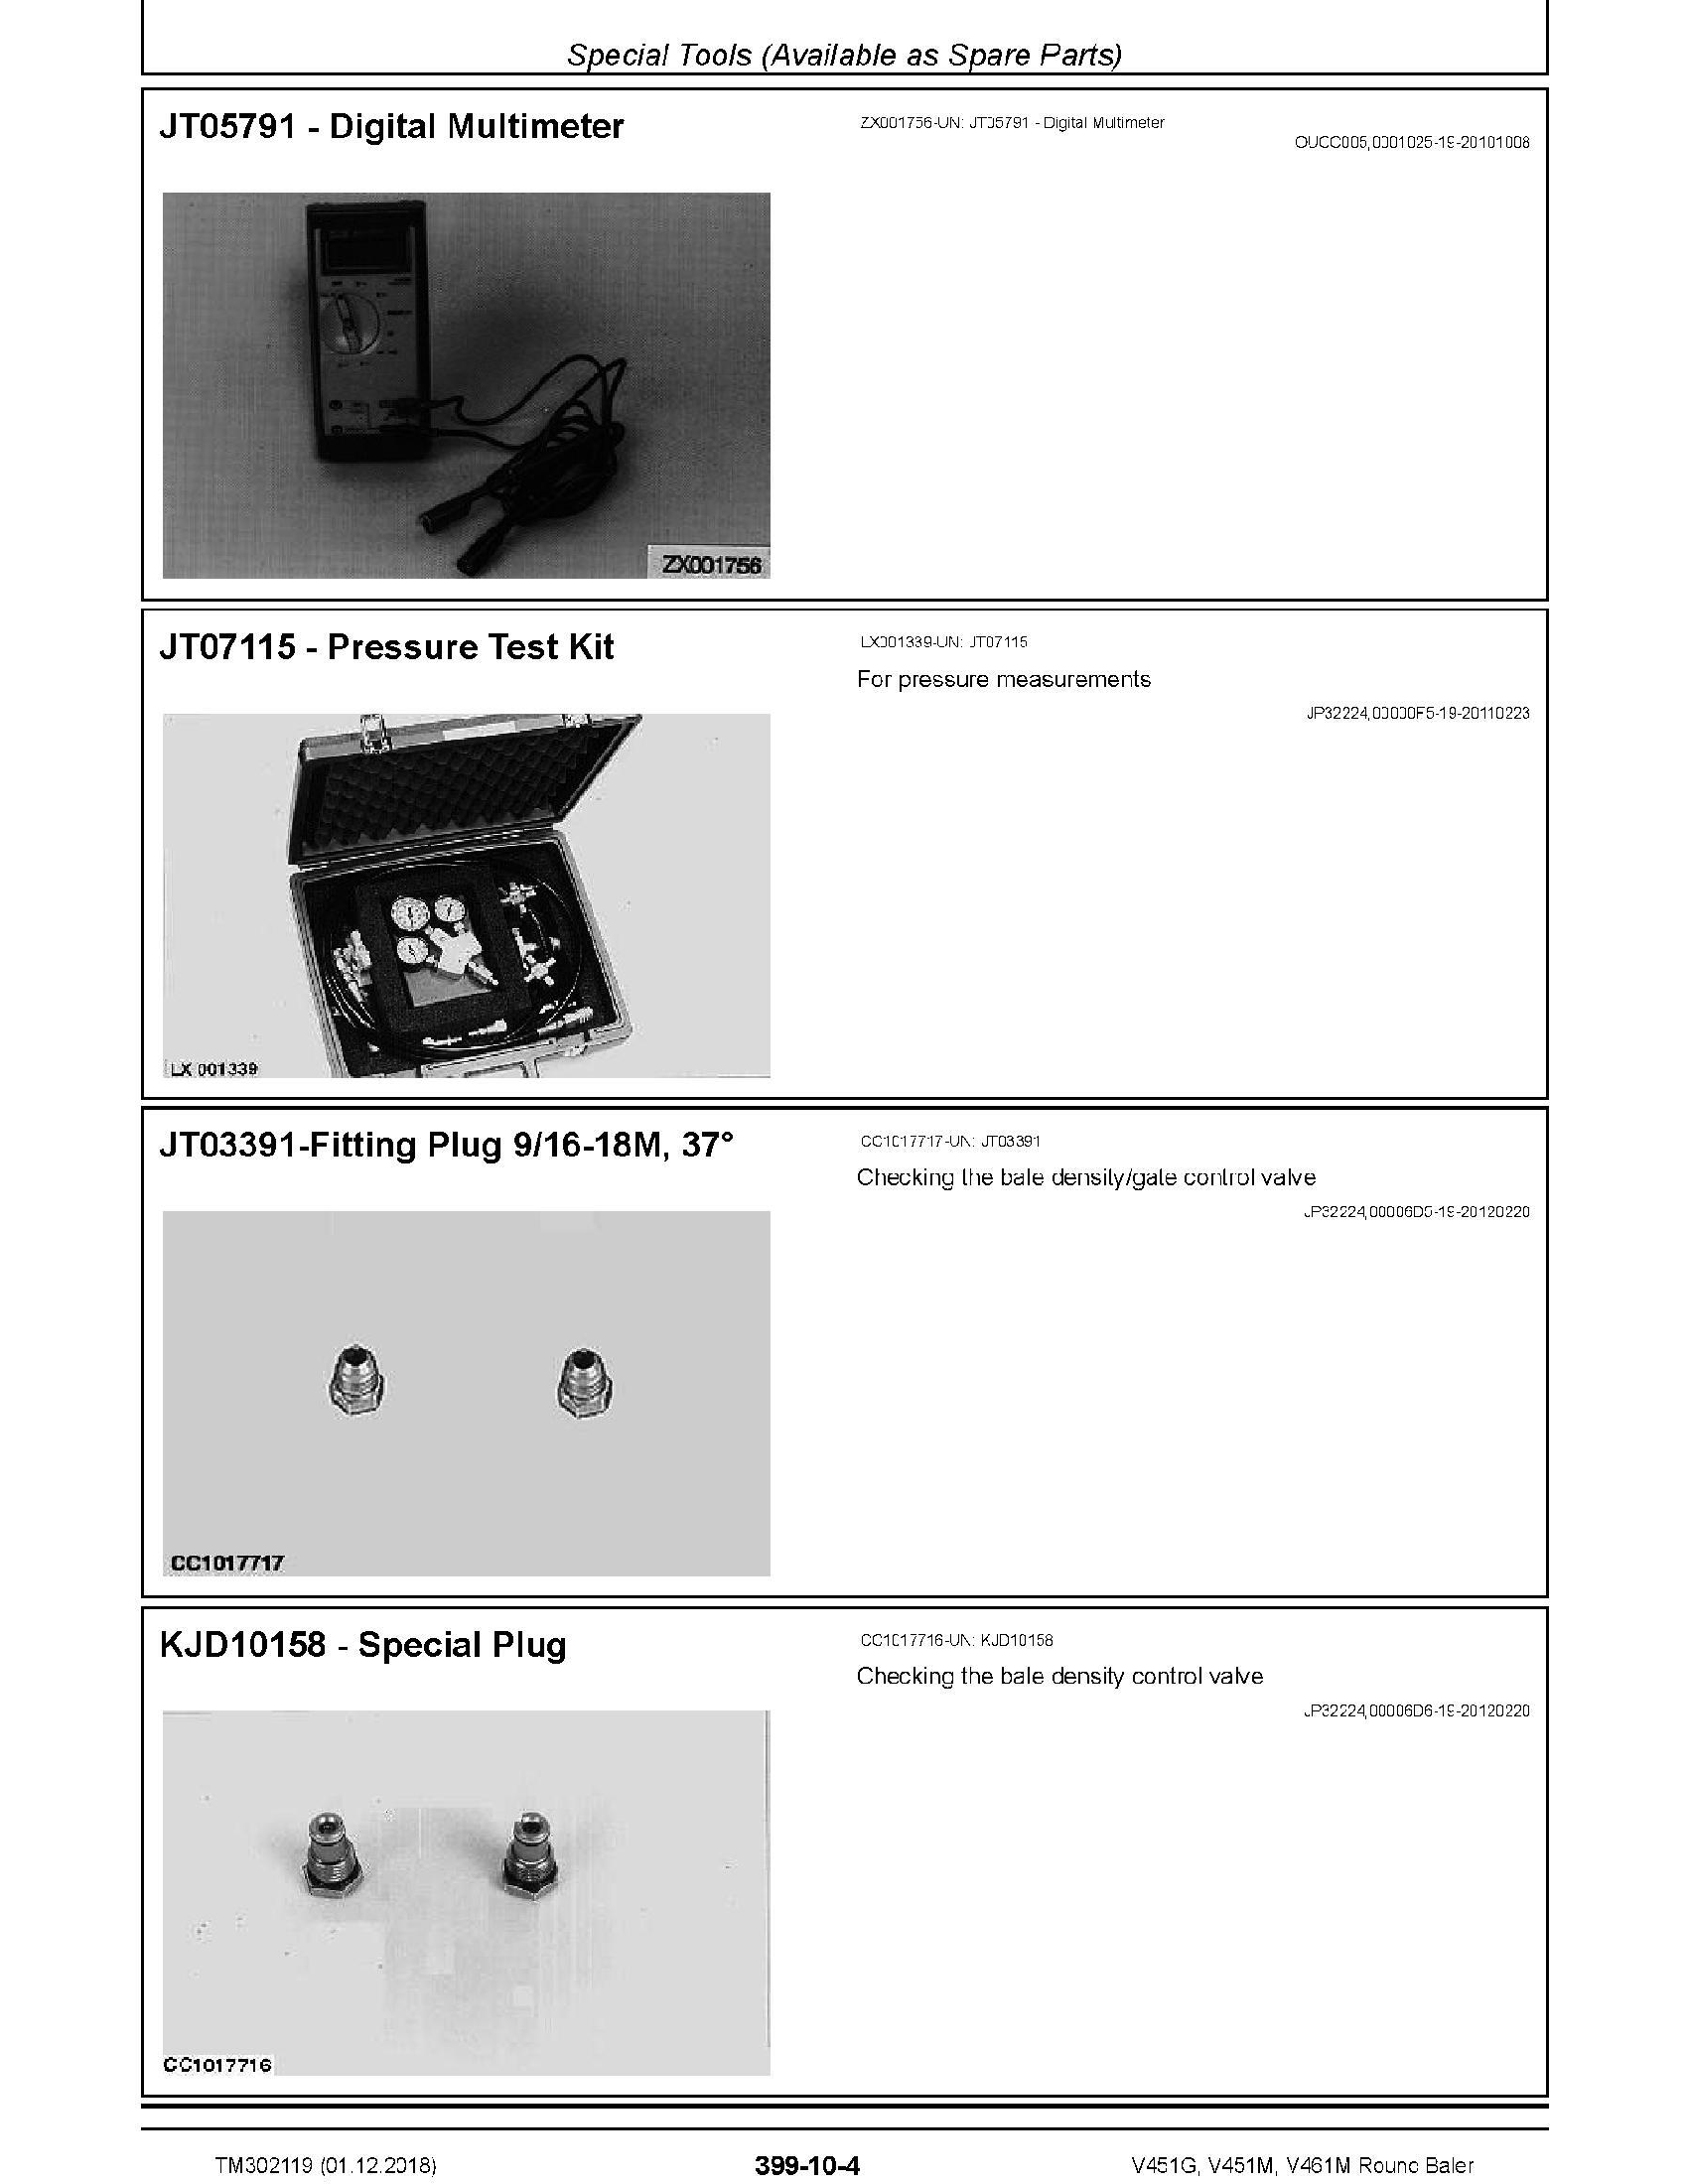 John Deere 862B-II manual pdf